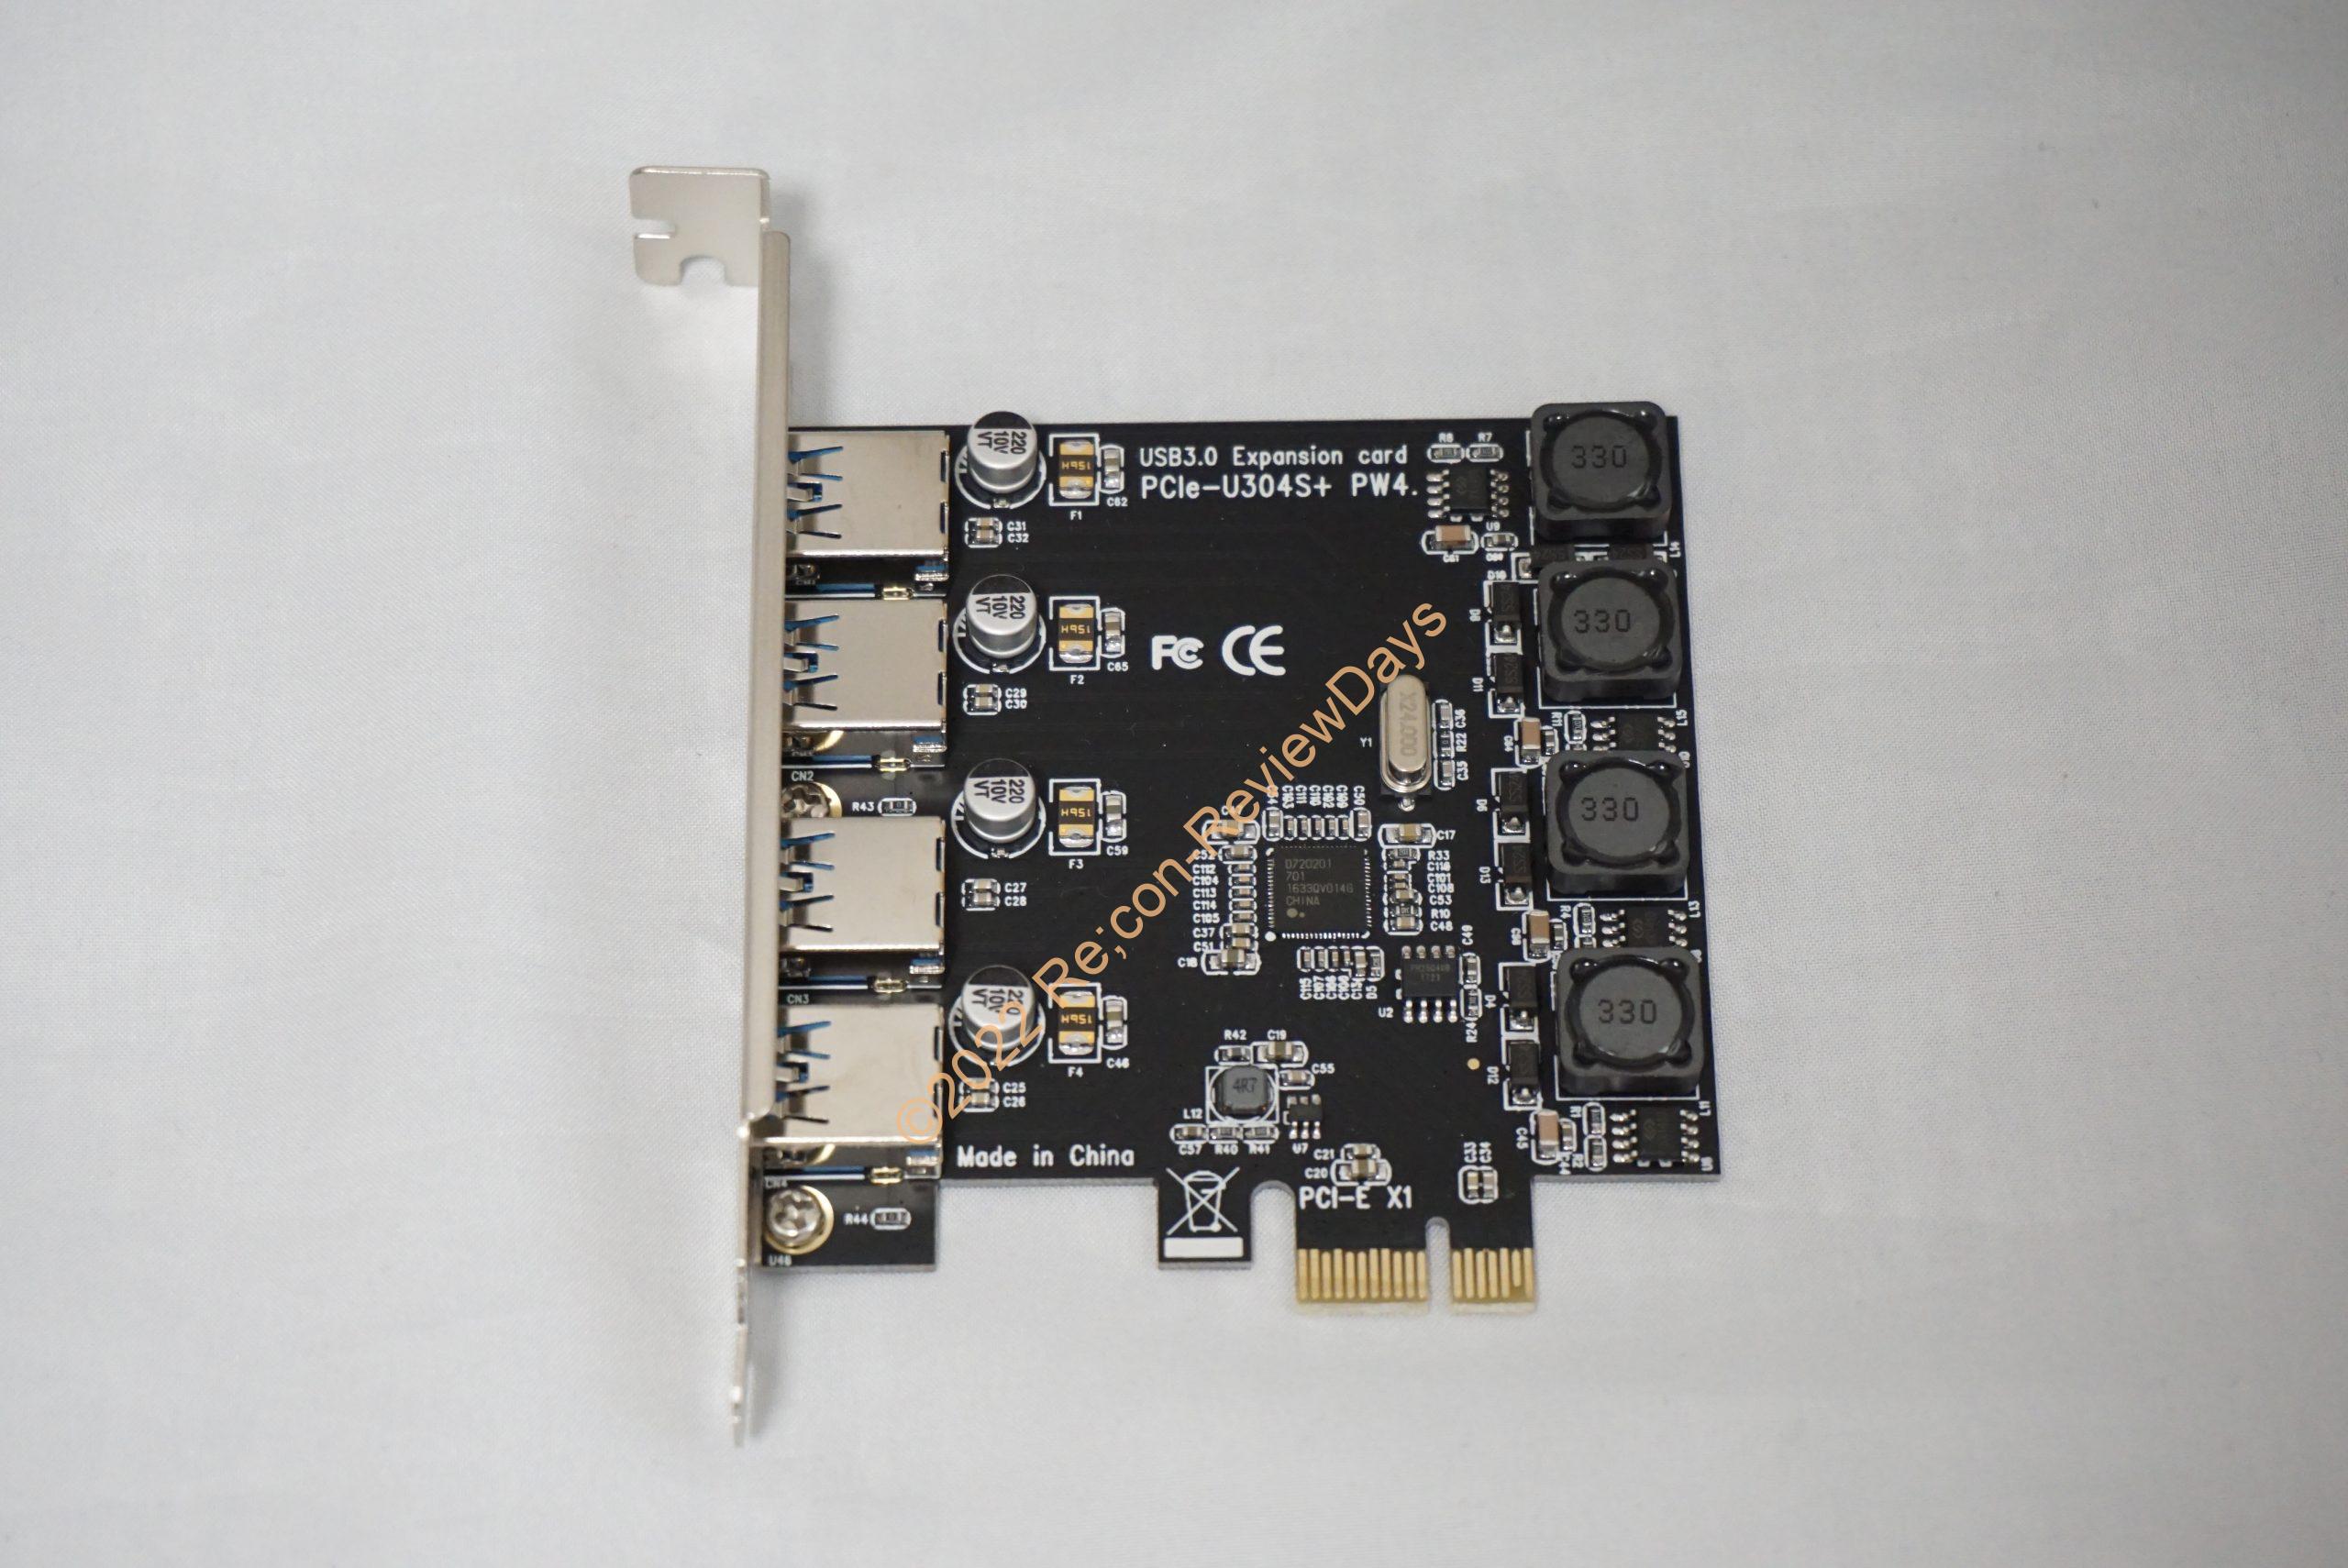 Amazonで特価で販売されていたPCIe×1接続のUSB 3.0×4ポート増設カード「IDEAPRO KI-1」を試す #USB3 #自作PC